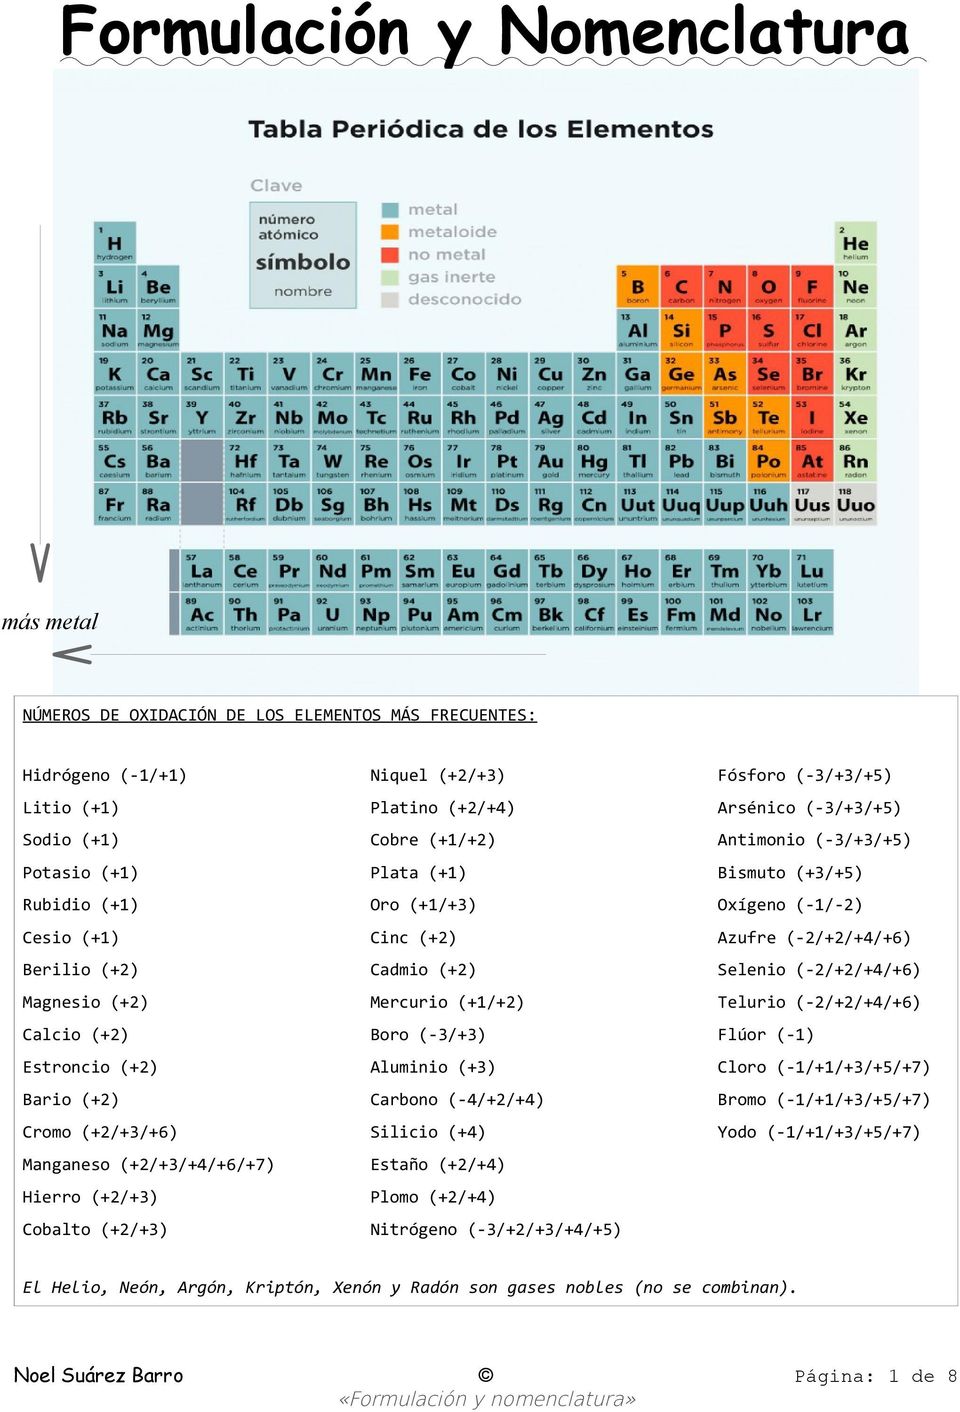 Magnesio (+2) Mercurio (+1/+2) Telurio (-2/+2/+4/+6) Calcio (+2) Boro (-3/+3) Flúor (-1) Estroncio (+2) Aluminio (+3) Cloro (-1/+1/+3/+5/+7) Bario (+2) Carbono (-4/+2/+4) Bromo (-1/+1/+3/+5/+7) Cromo